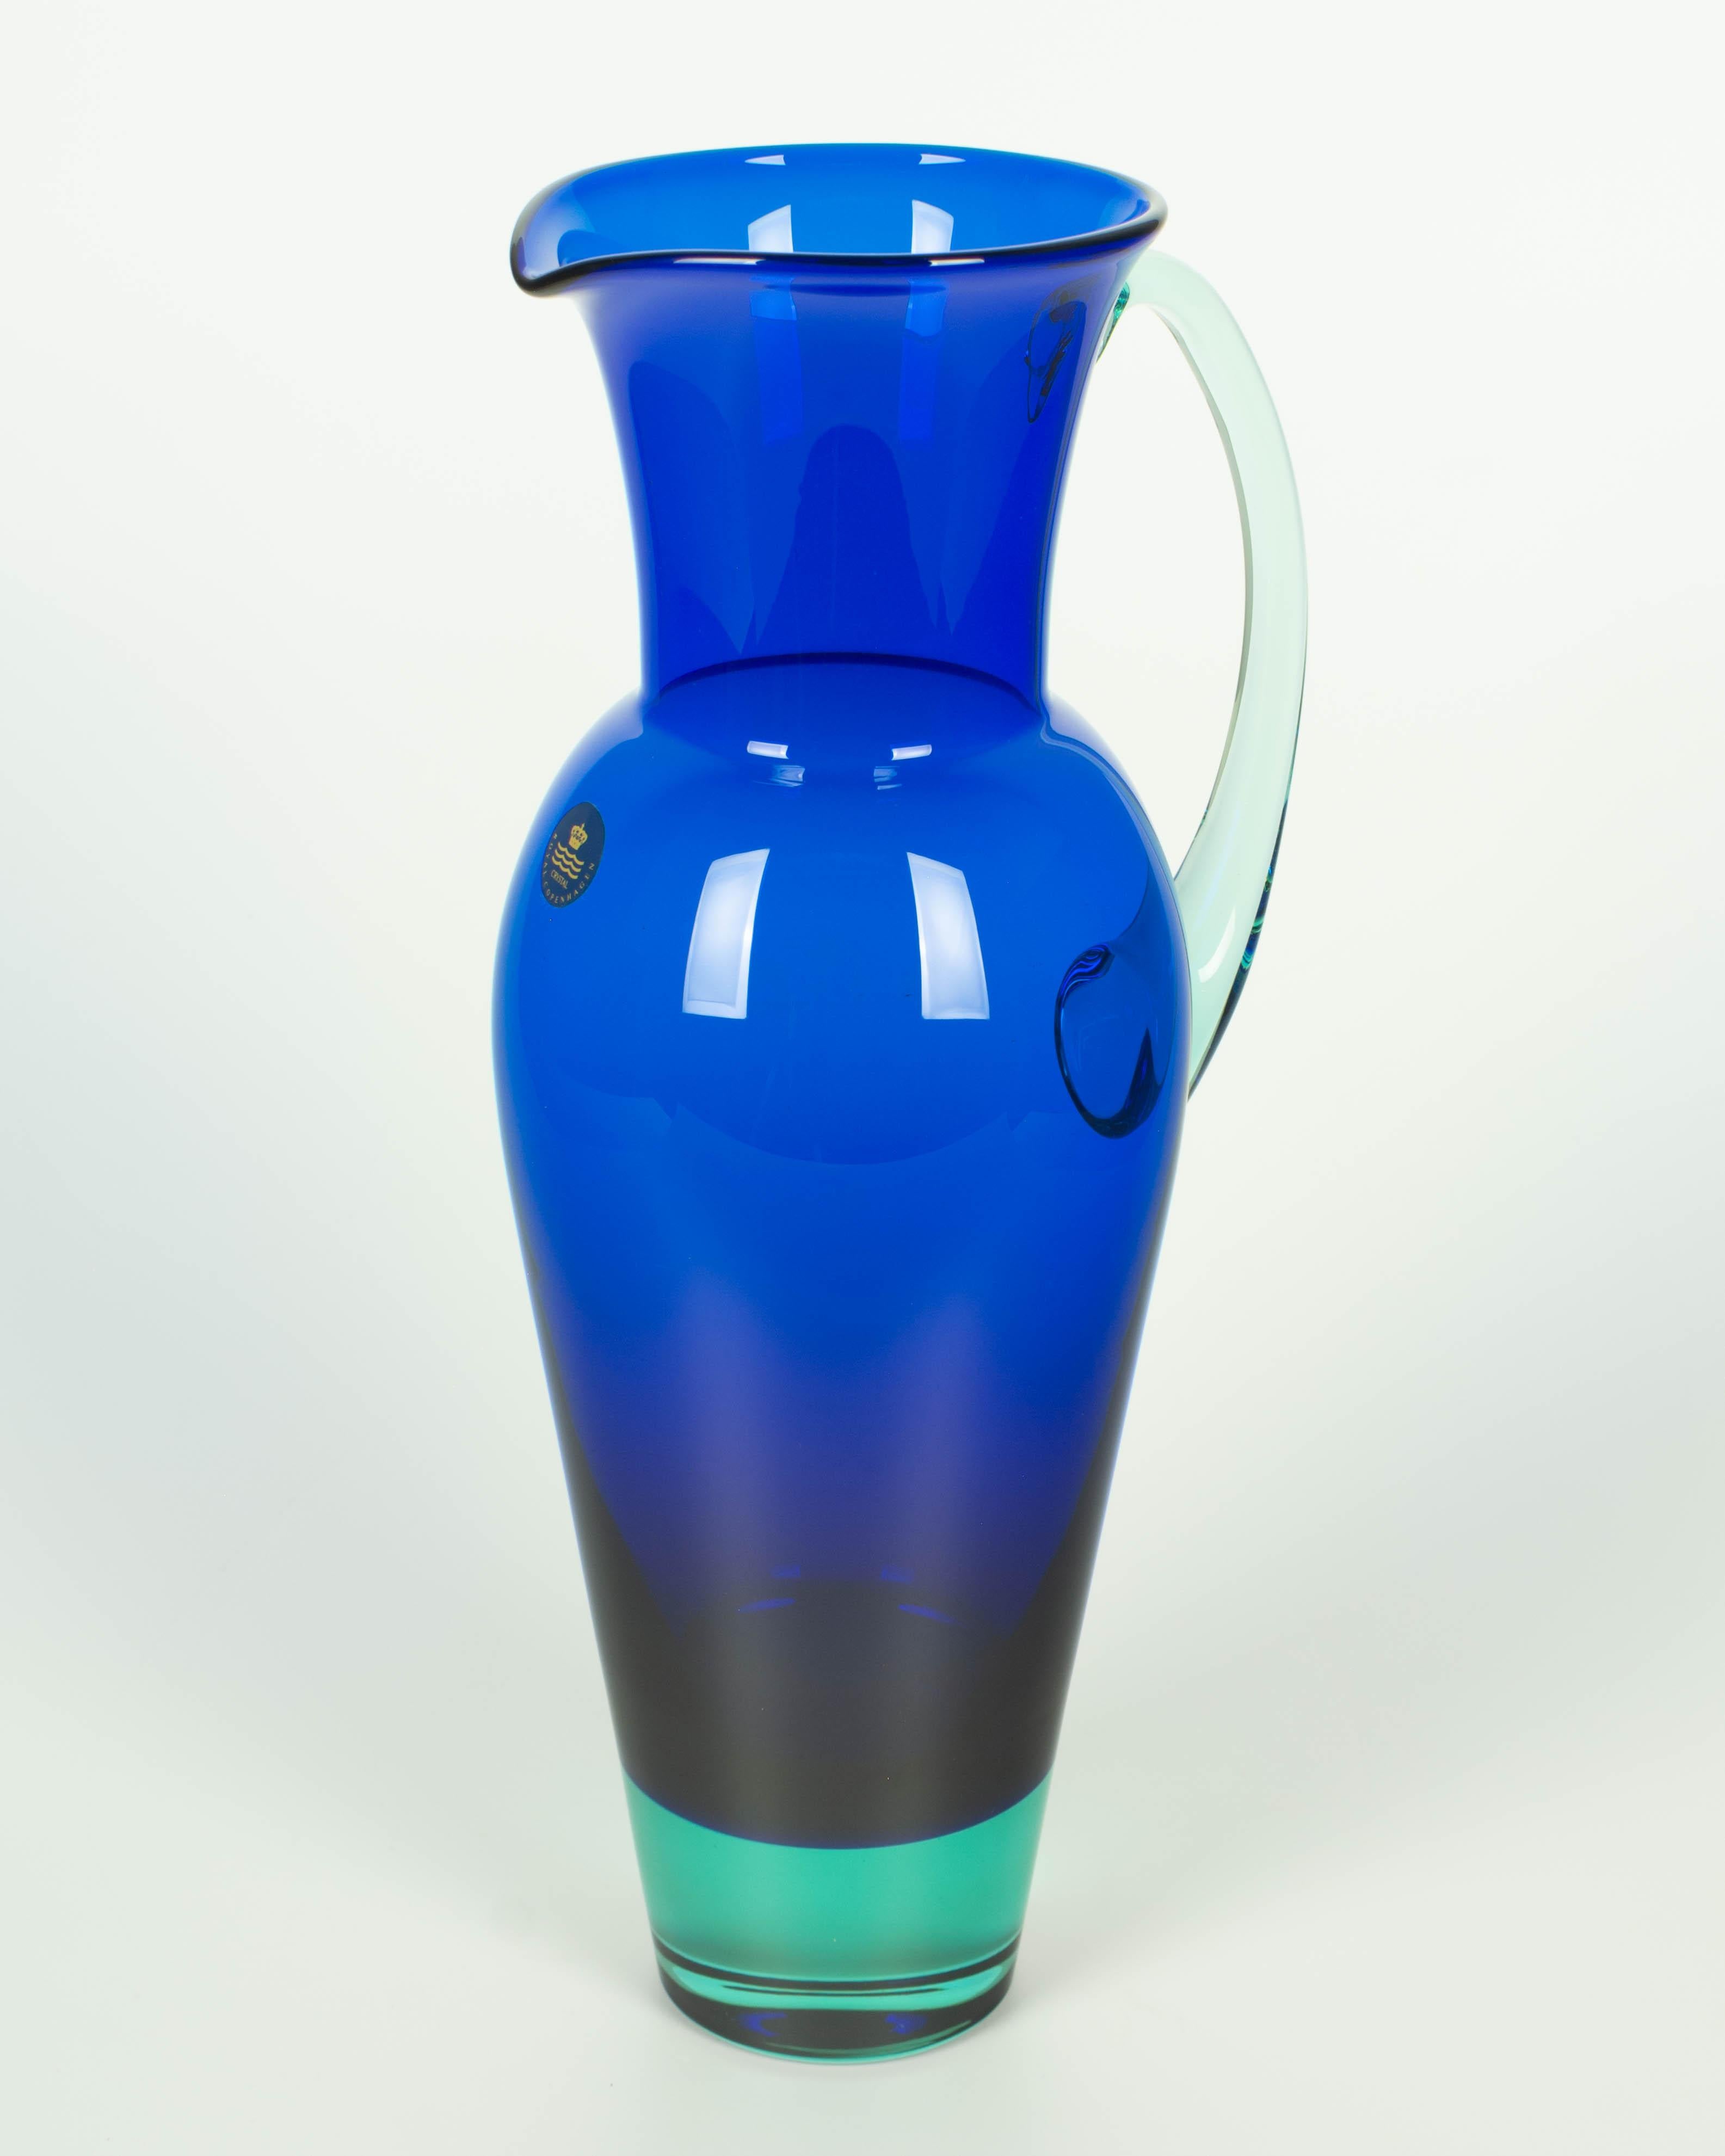 Vintage cobalt blue and green crystal pitcher made by Holmegaard Glass for Royal Copenhagen. Original Royal Copenhagen sticker. Circa 1980s.
Dimensions: 5